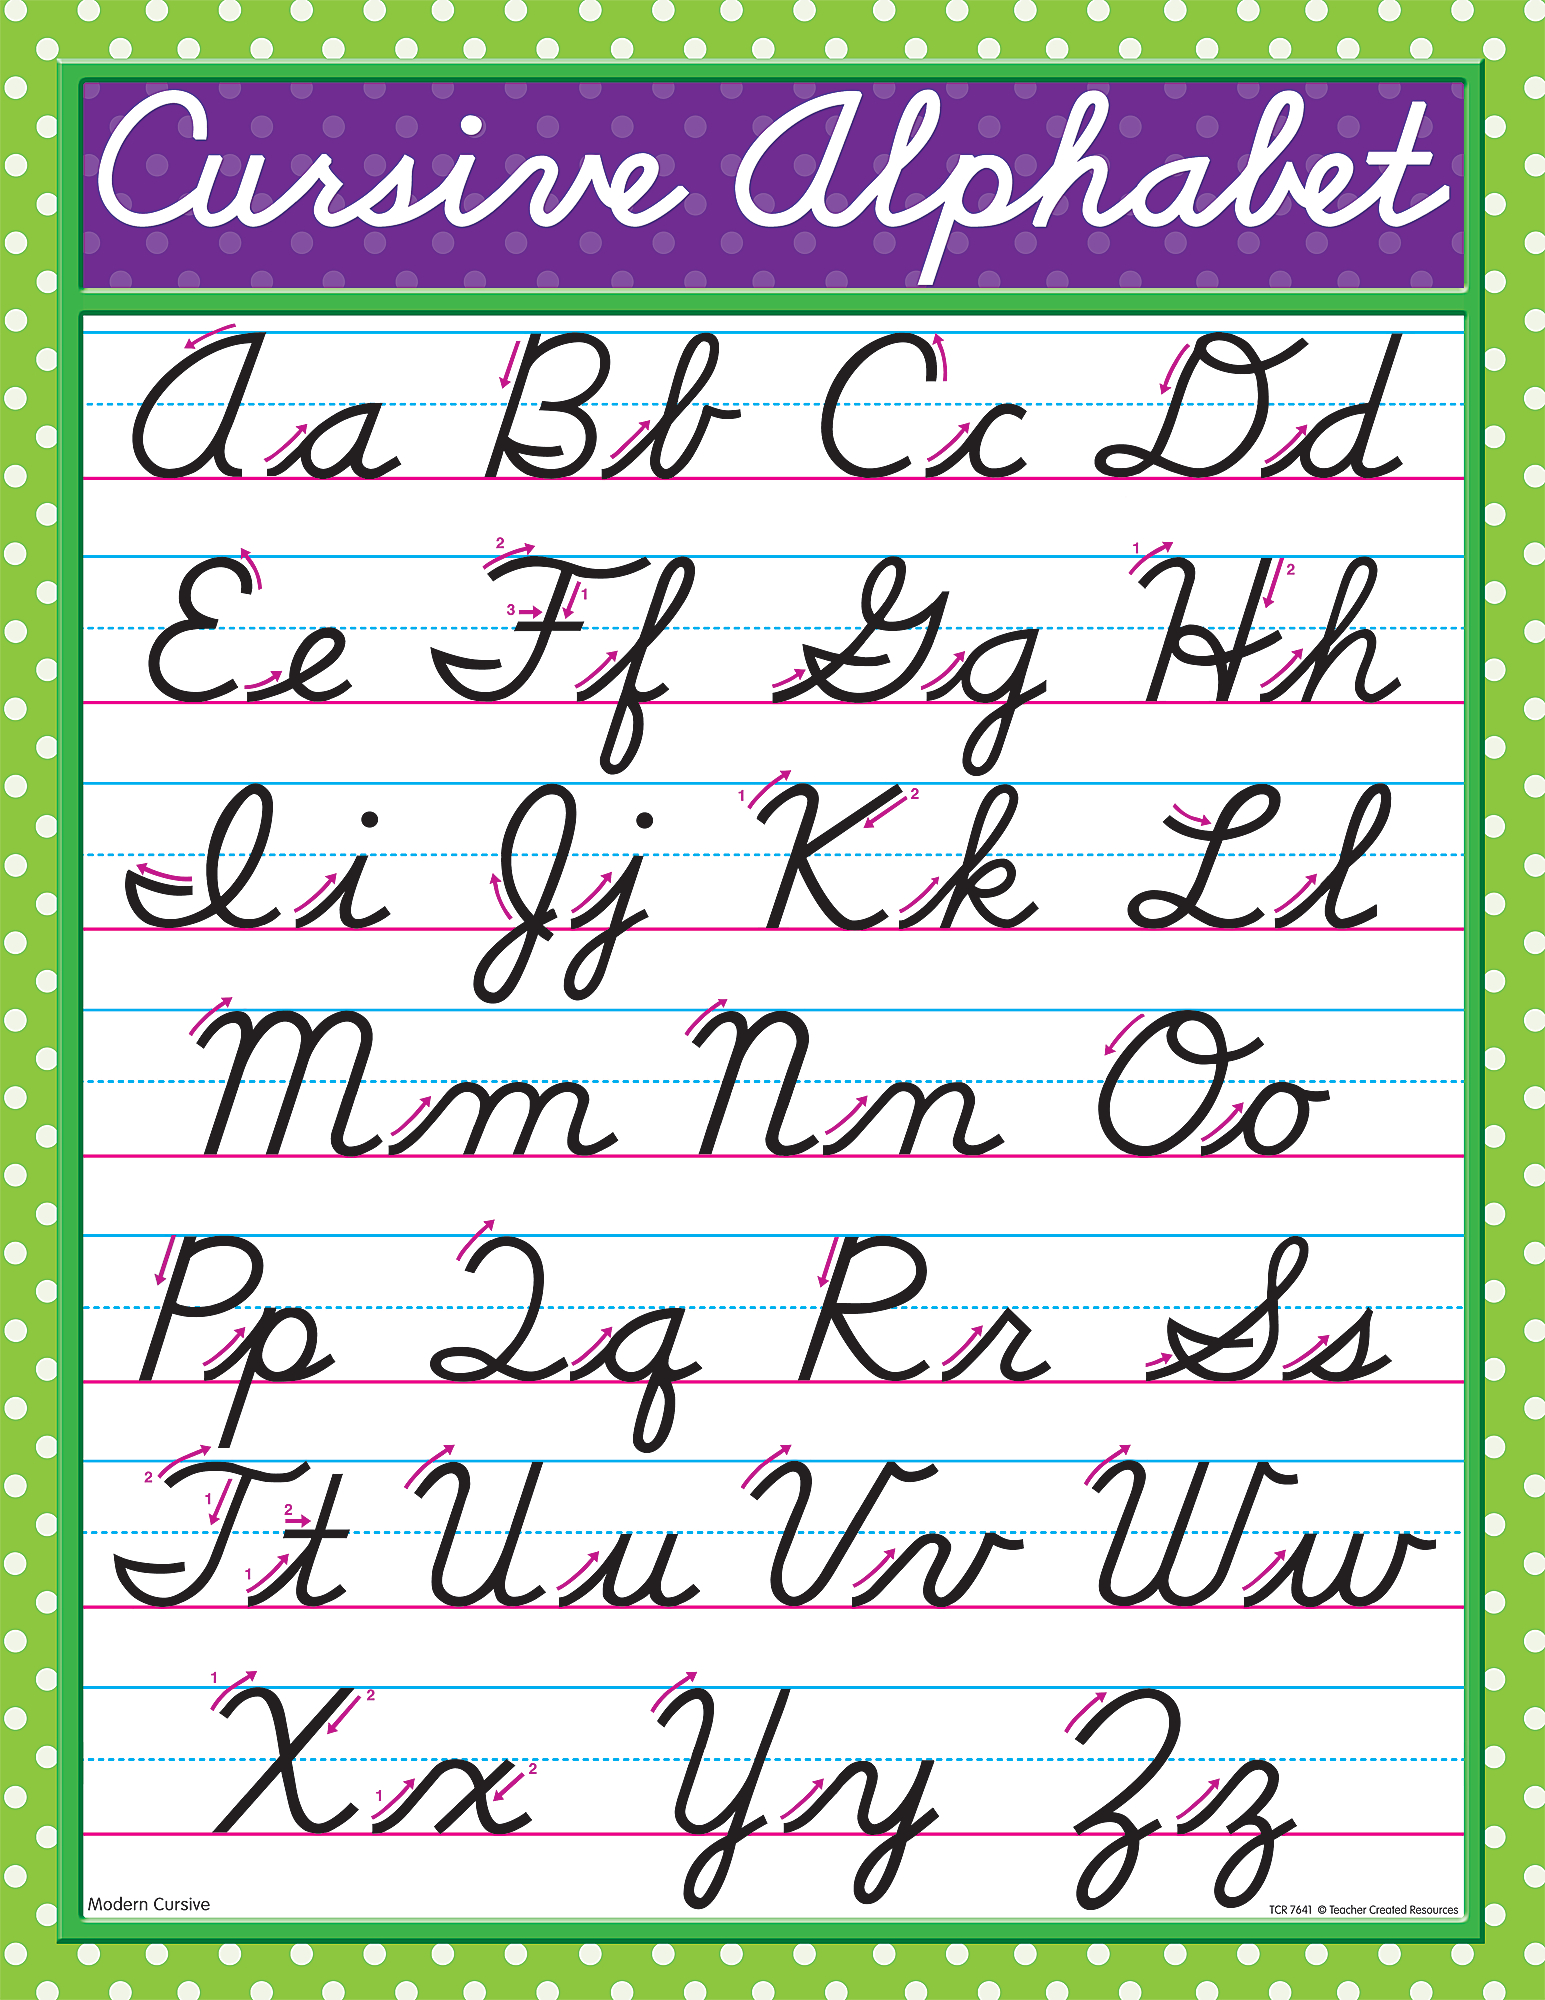 Victorian Cursive Alphabet AlphabetWorksheetsFree